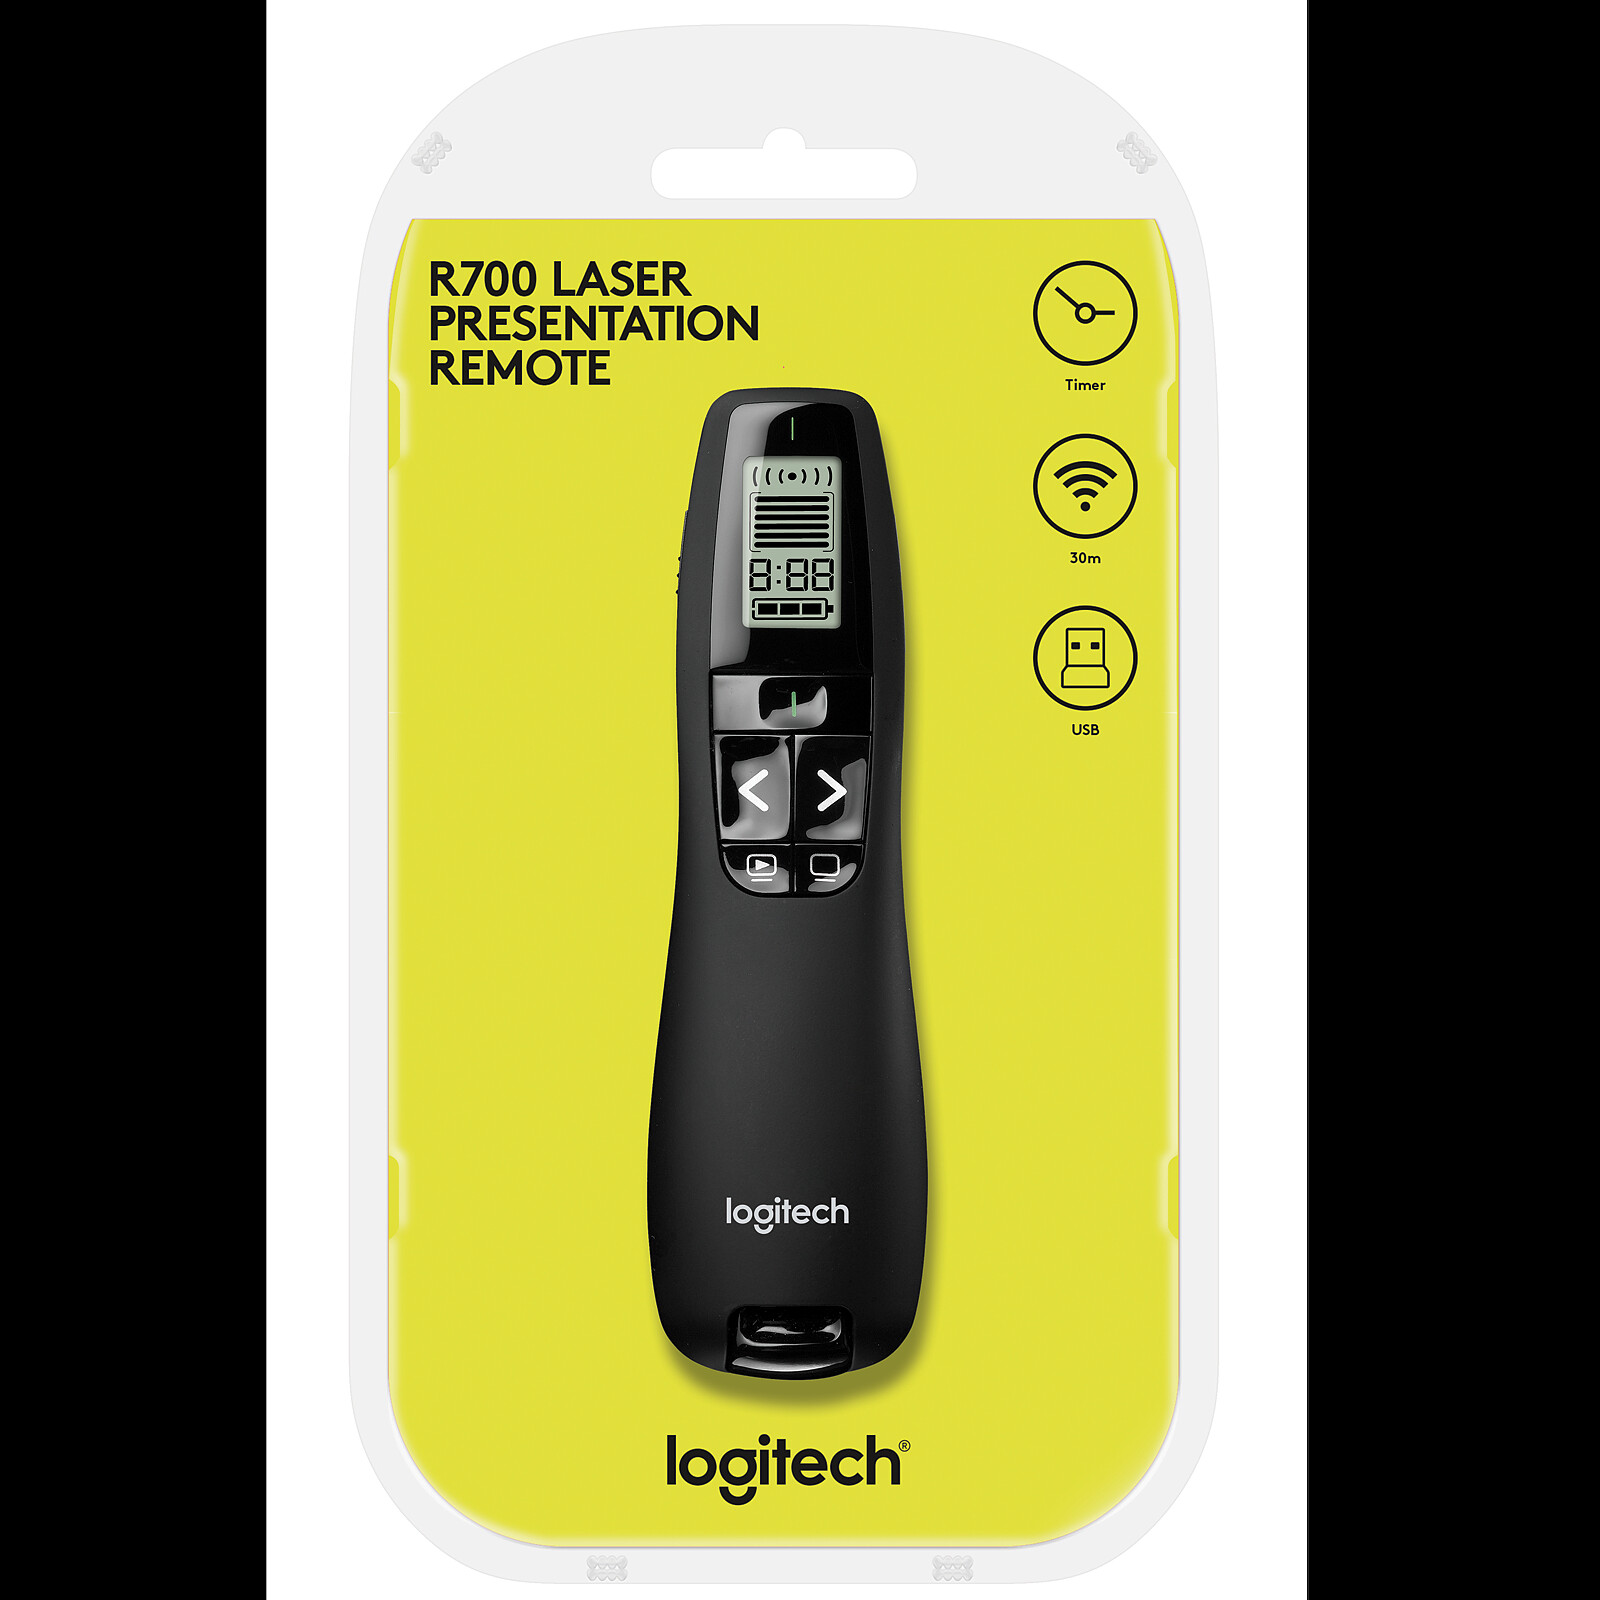 Logitech Professional Presenter R700 Laser pointer on LDLC